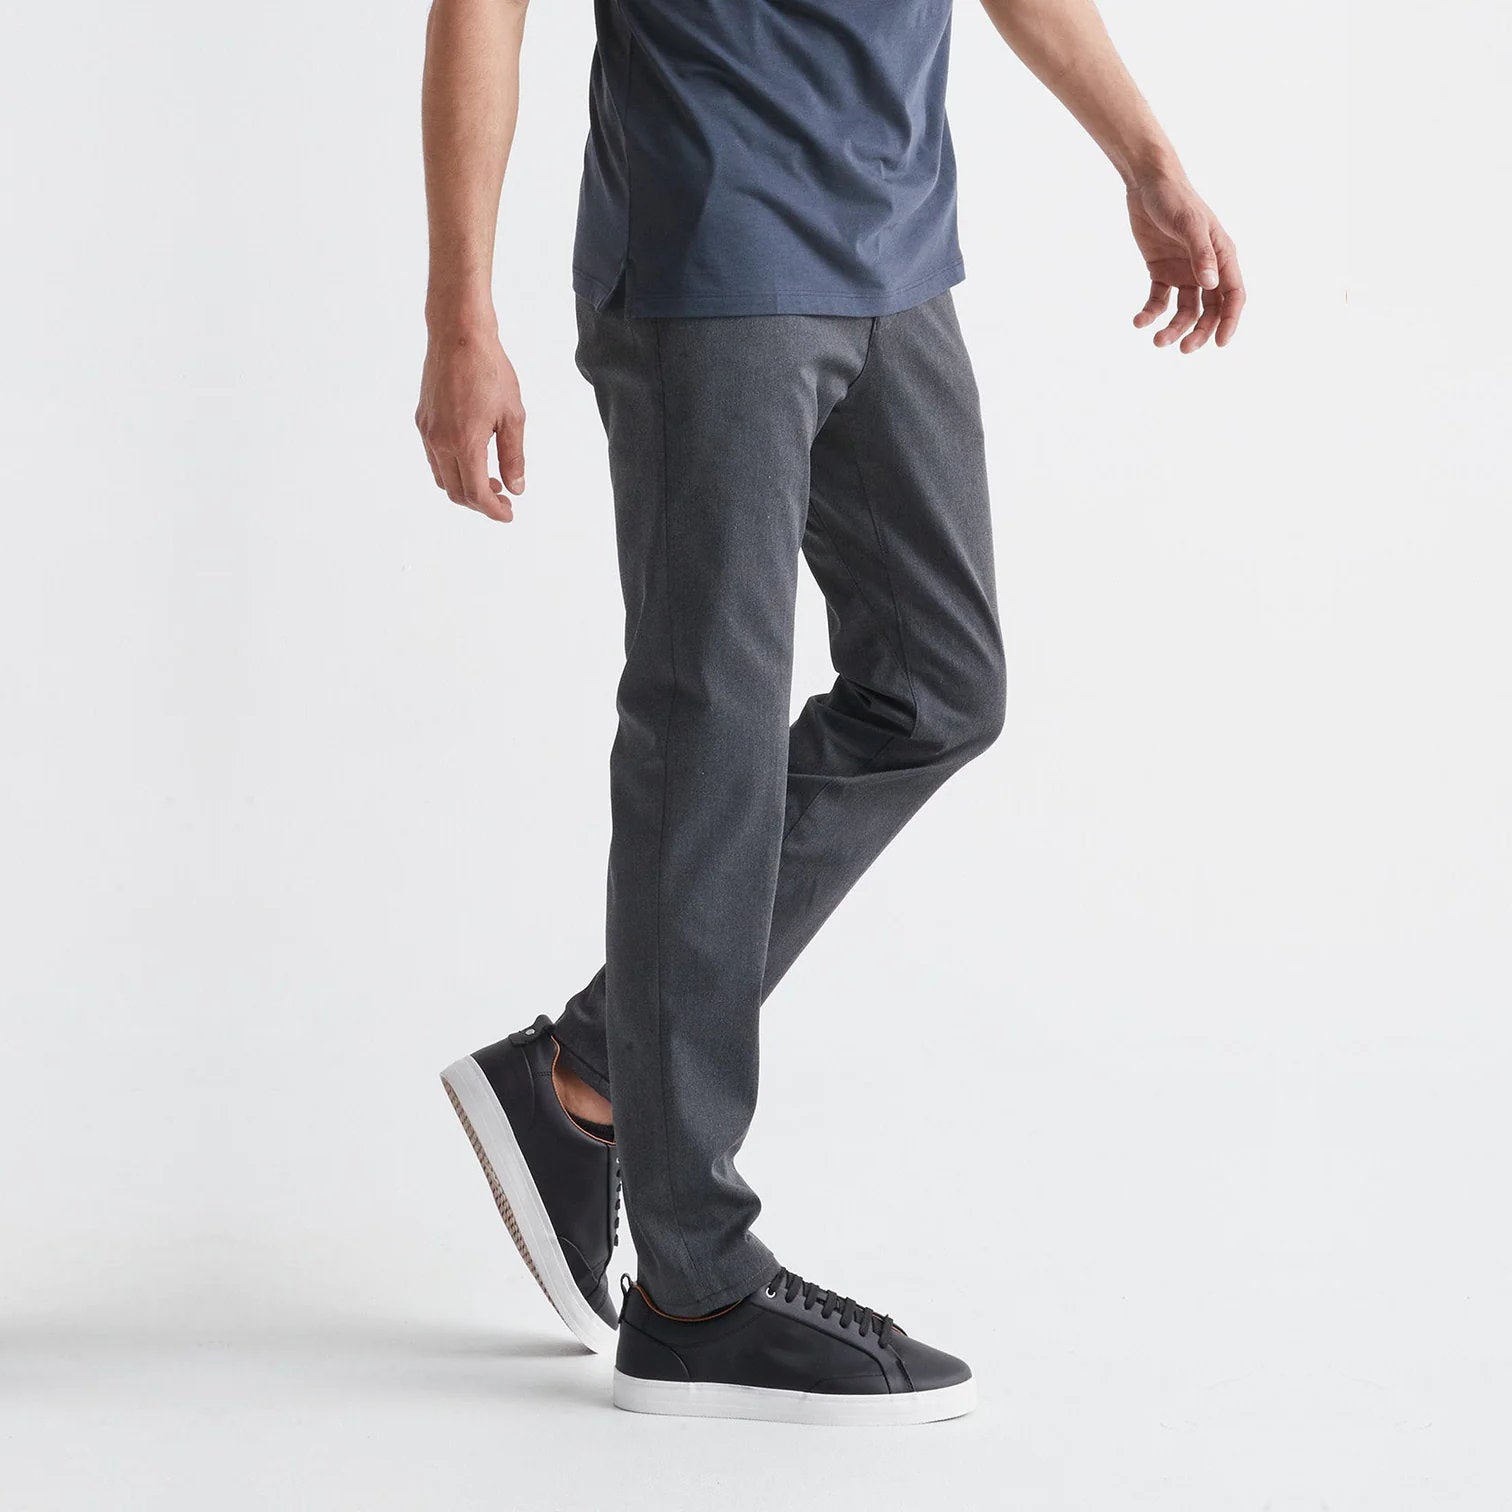 'Du/er Smart Stretch Slim Trouser' in 'Charcoal' colour